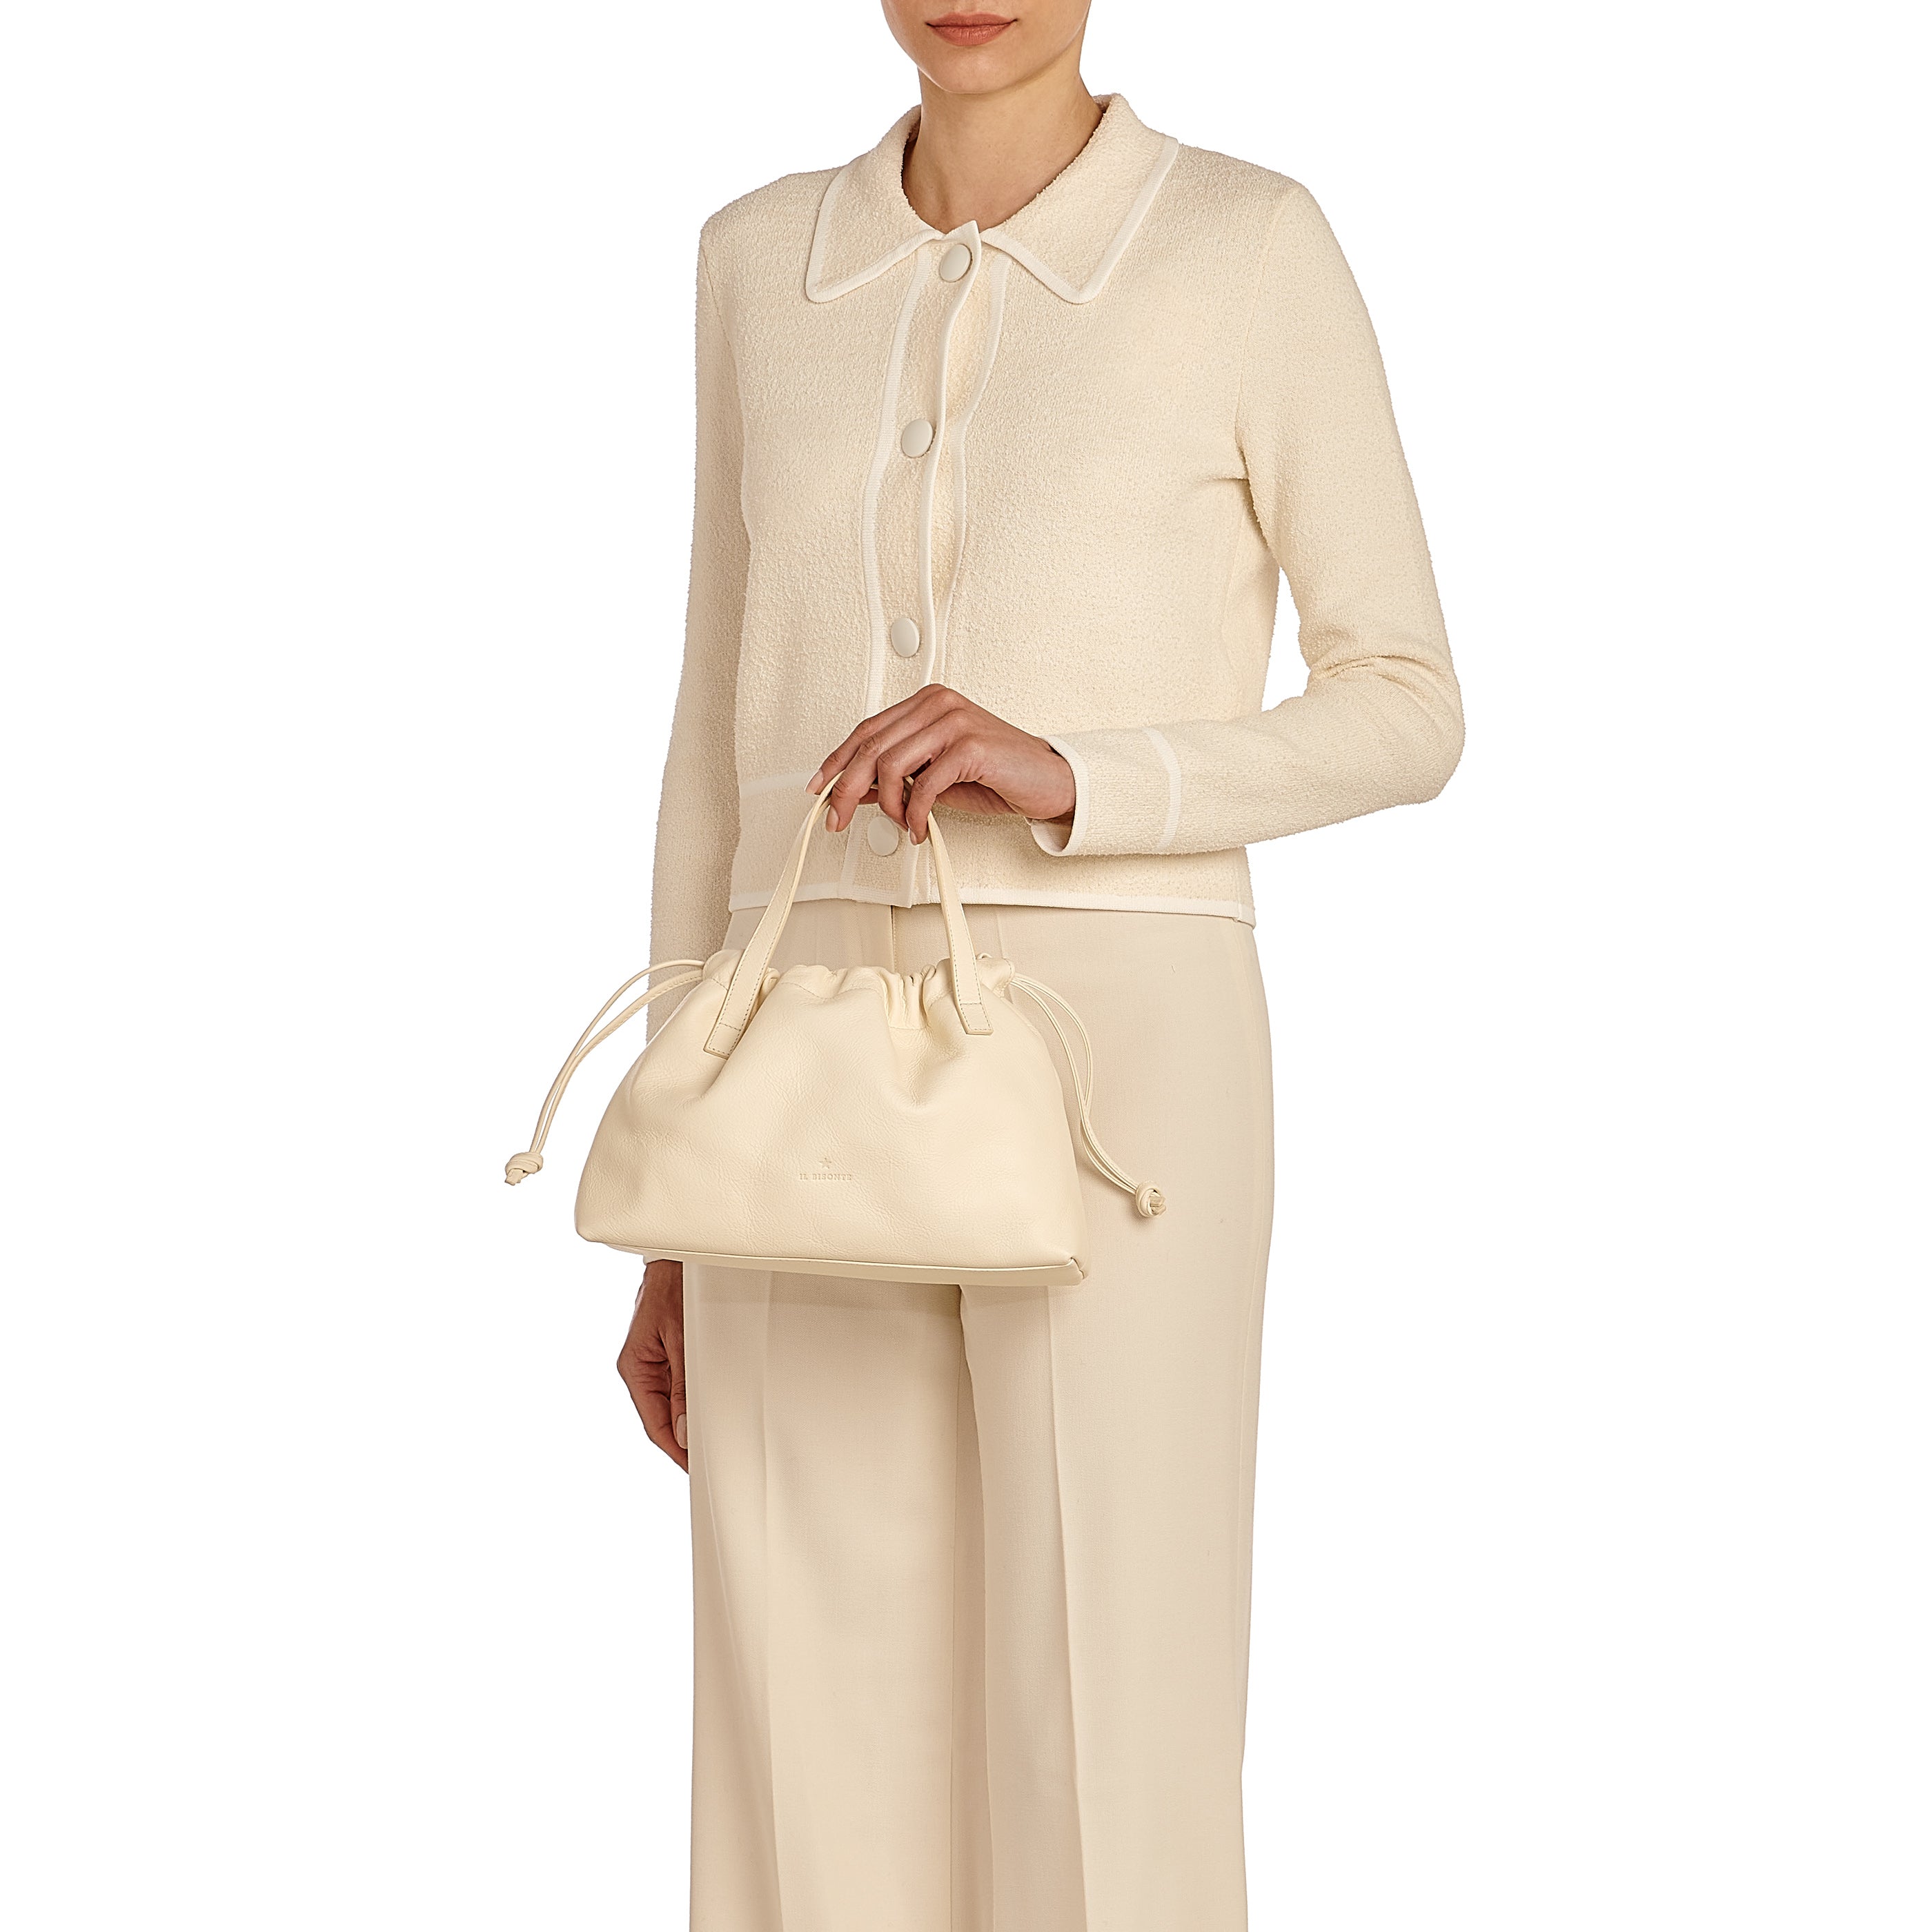 Bellini | Women's handbag in leather color milk